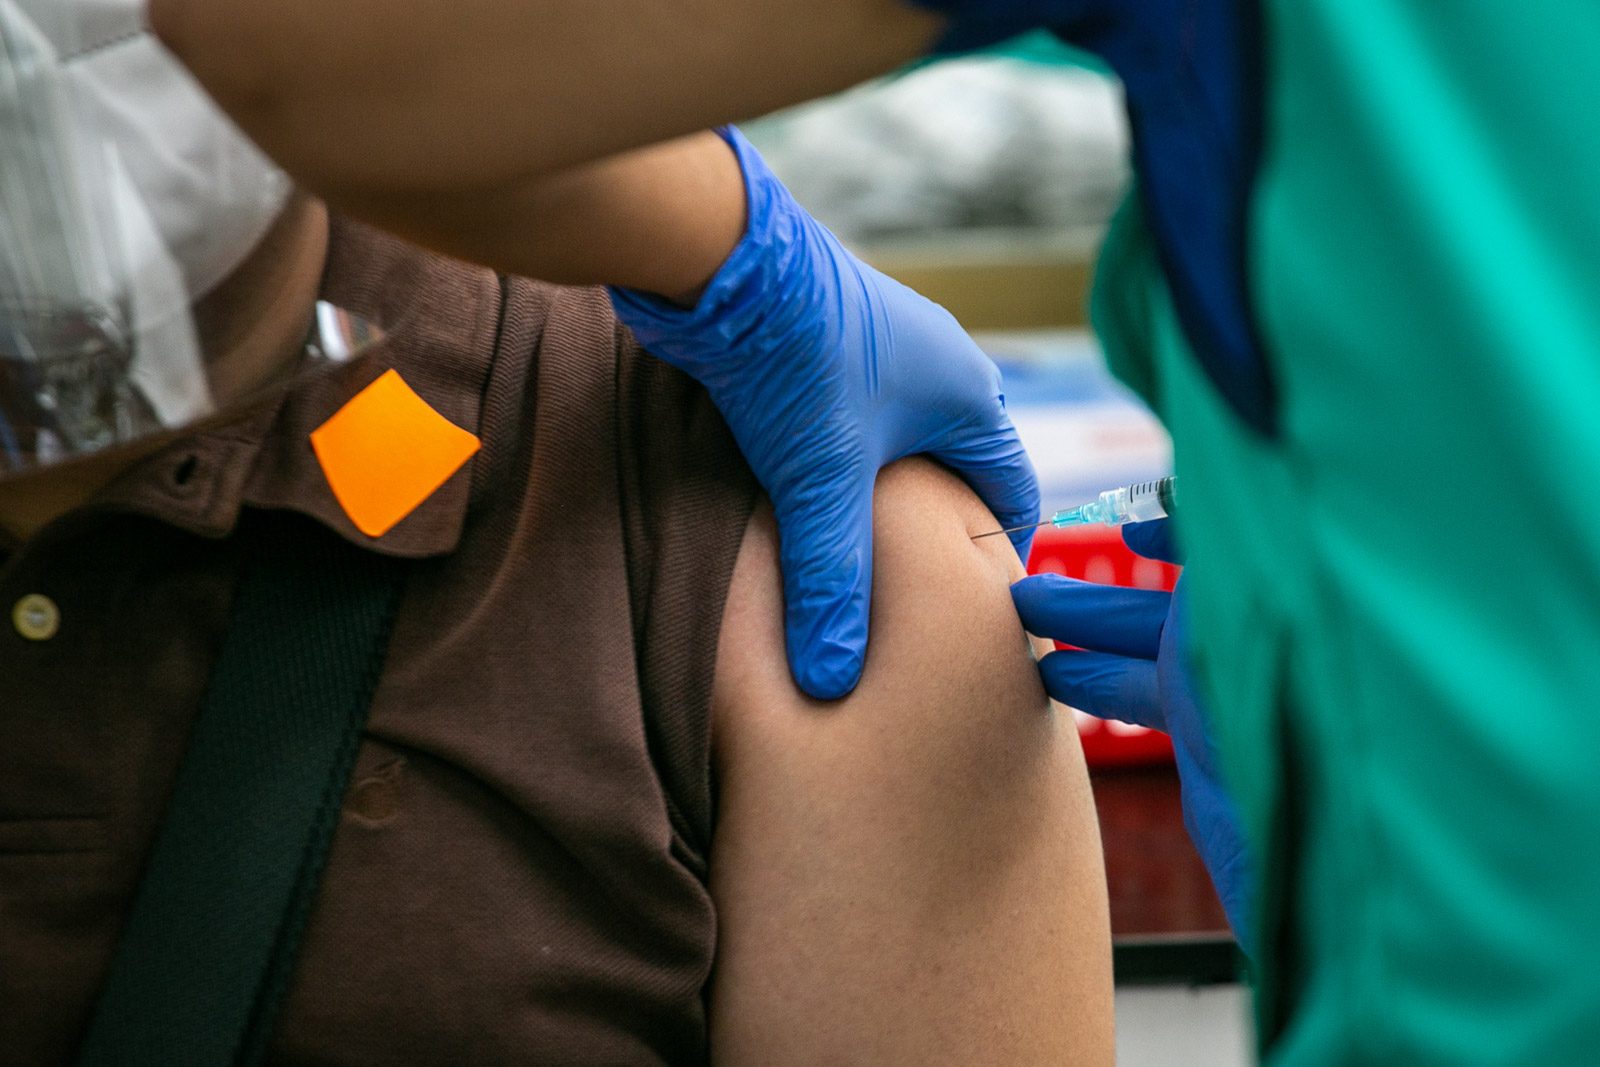 TRACKER: The Philippines’ COVID-19 vaccine distribution